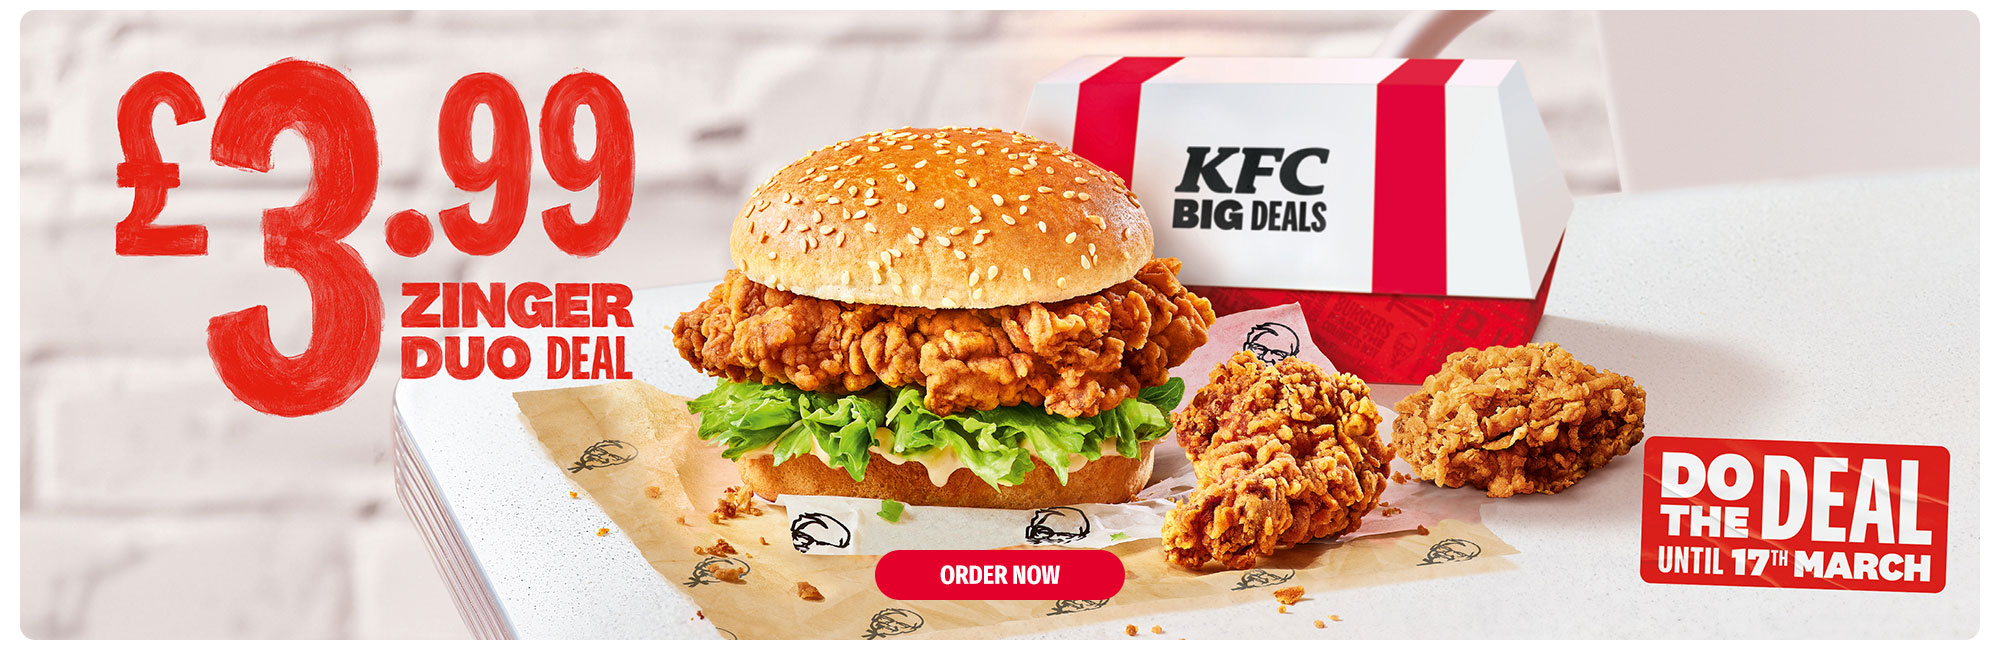 KFC - Zinger duo burger